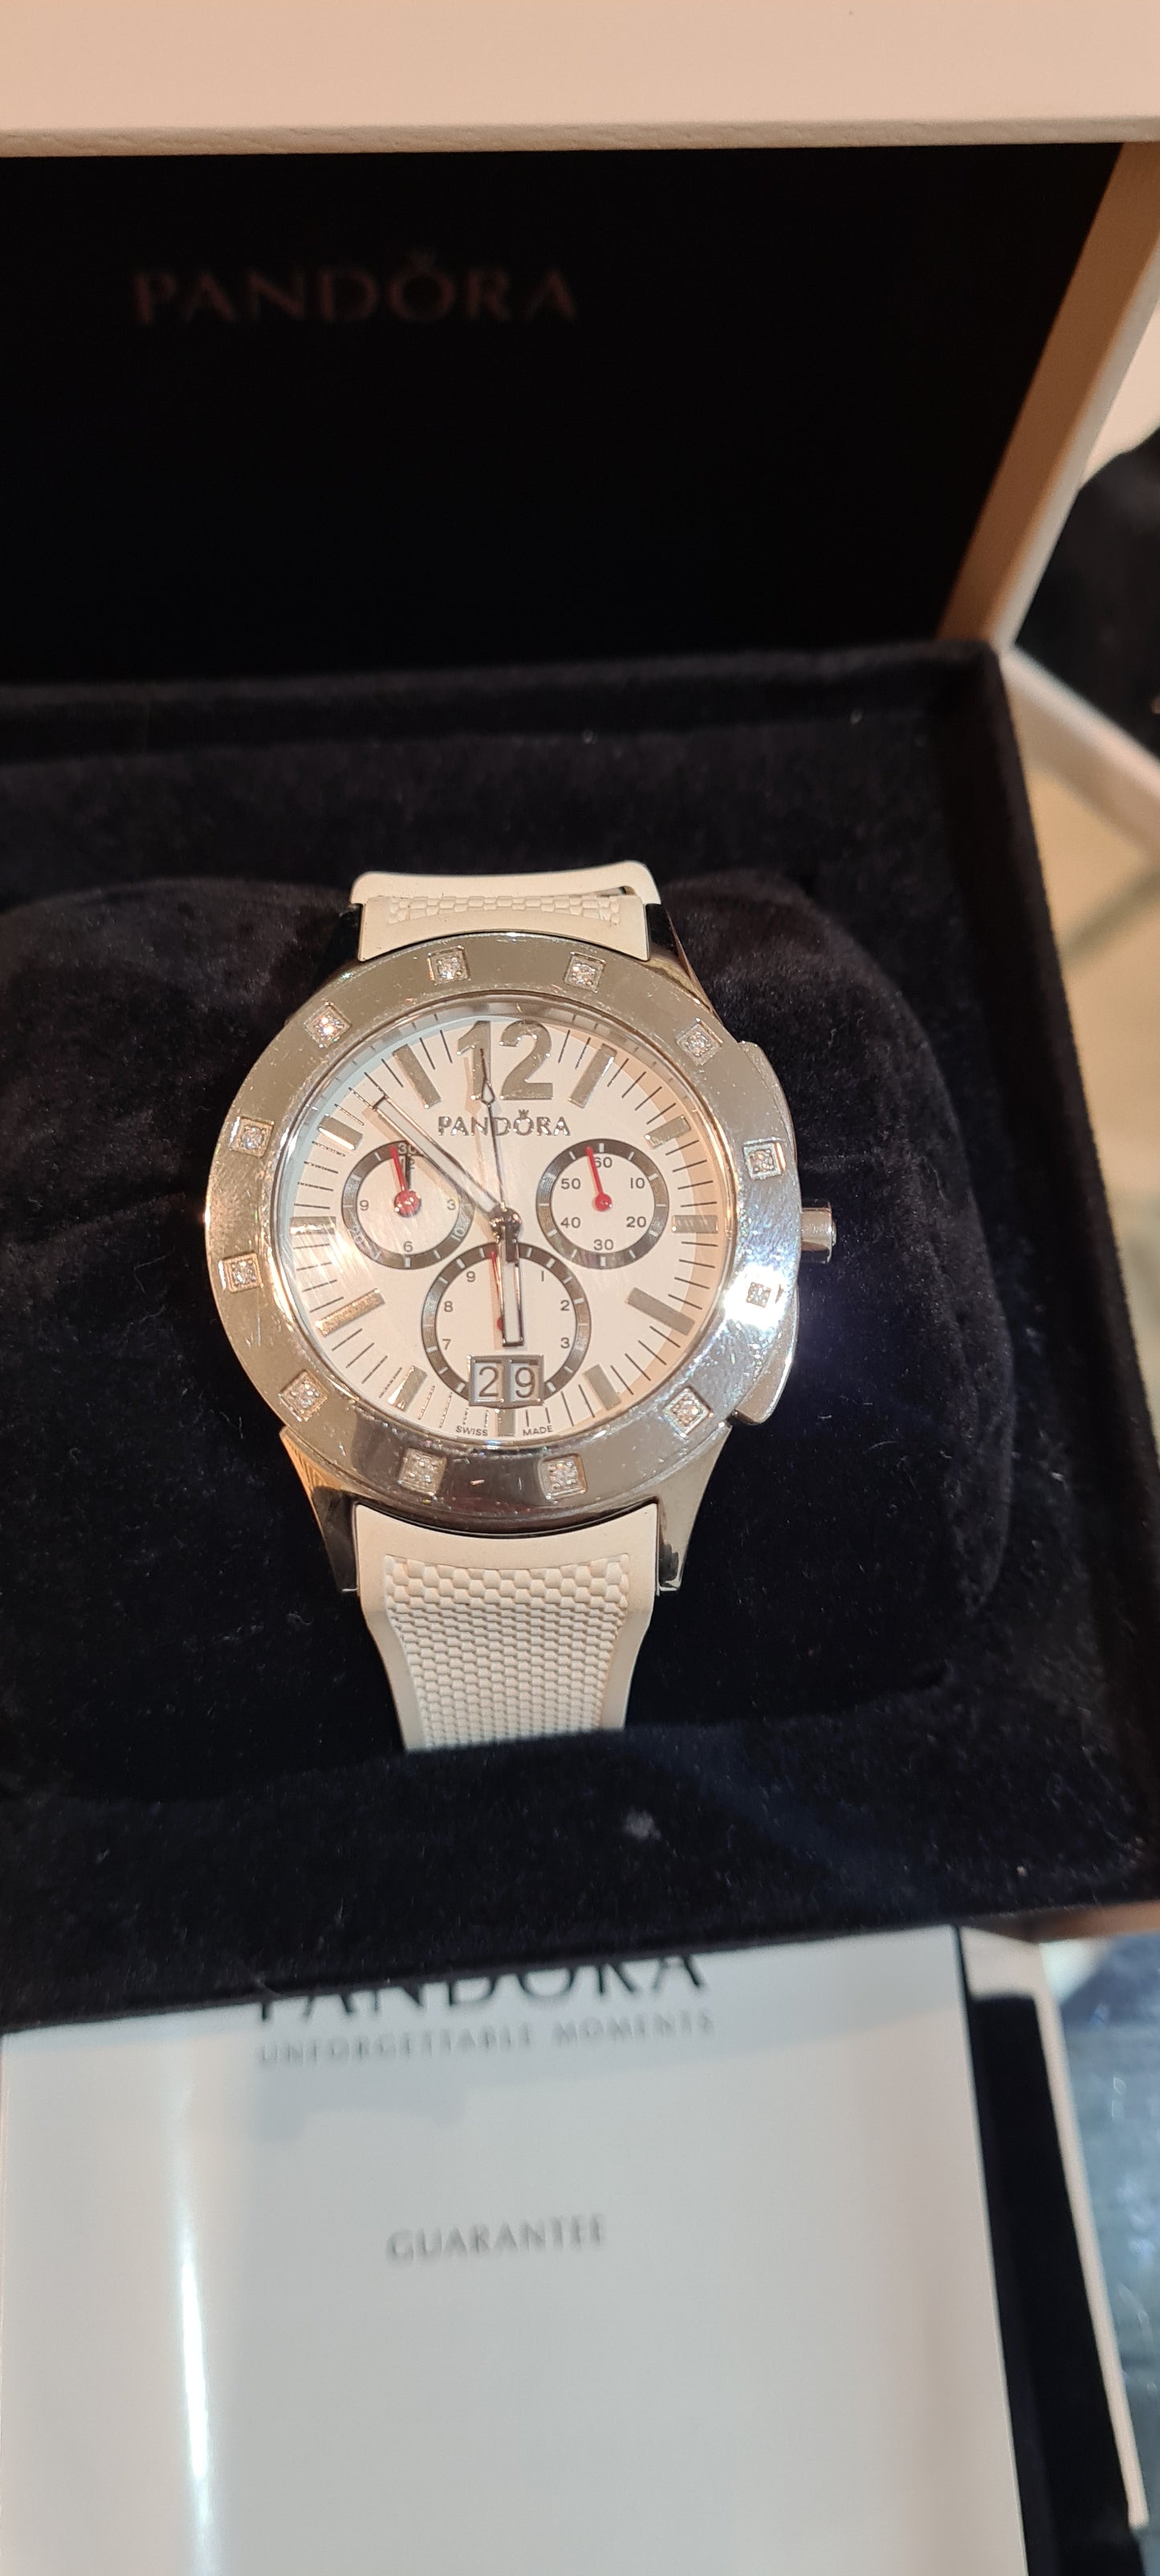 Genuine Pandora Grand C Large Watch Spare Straps